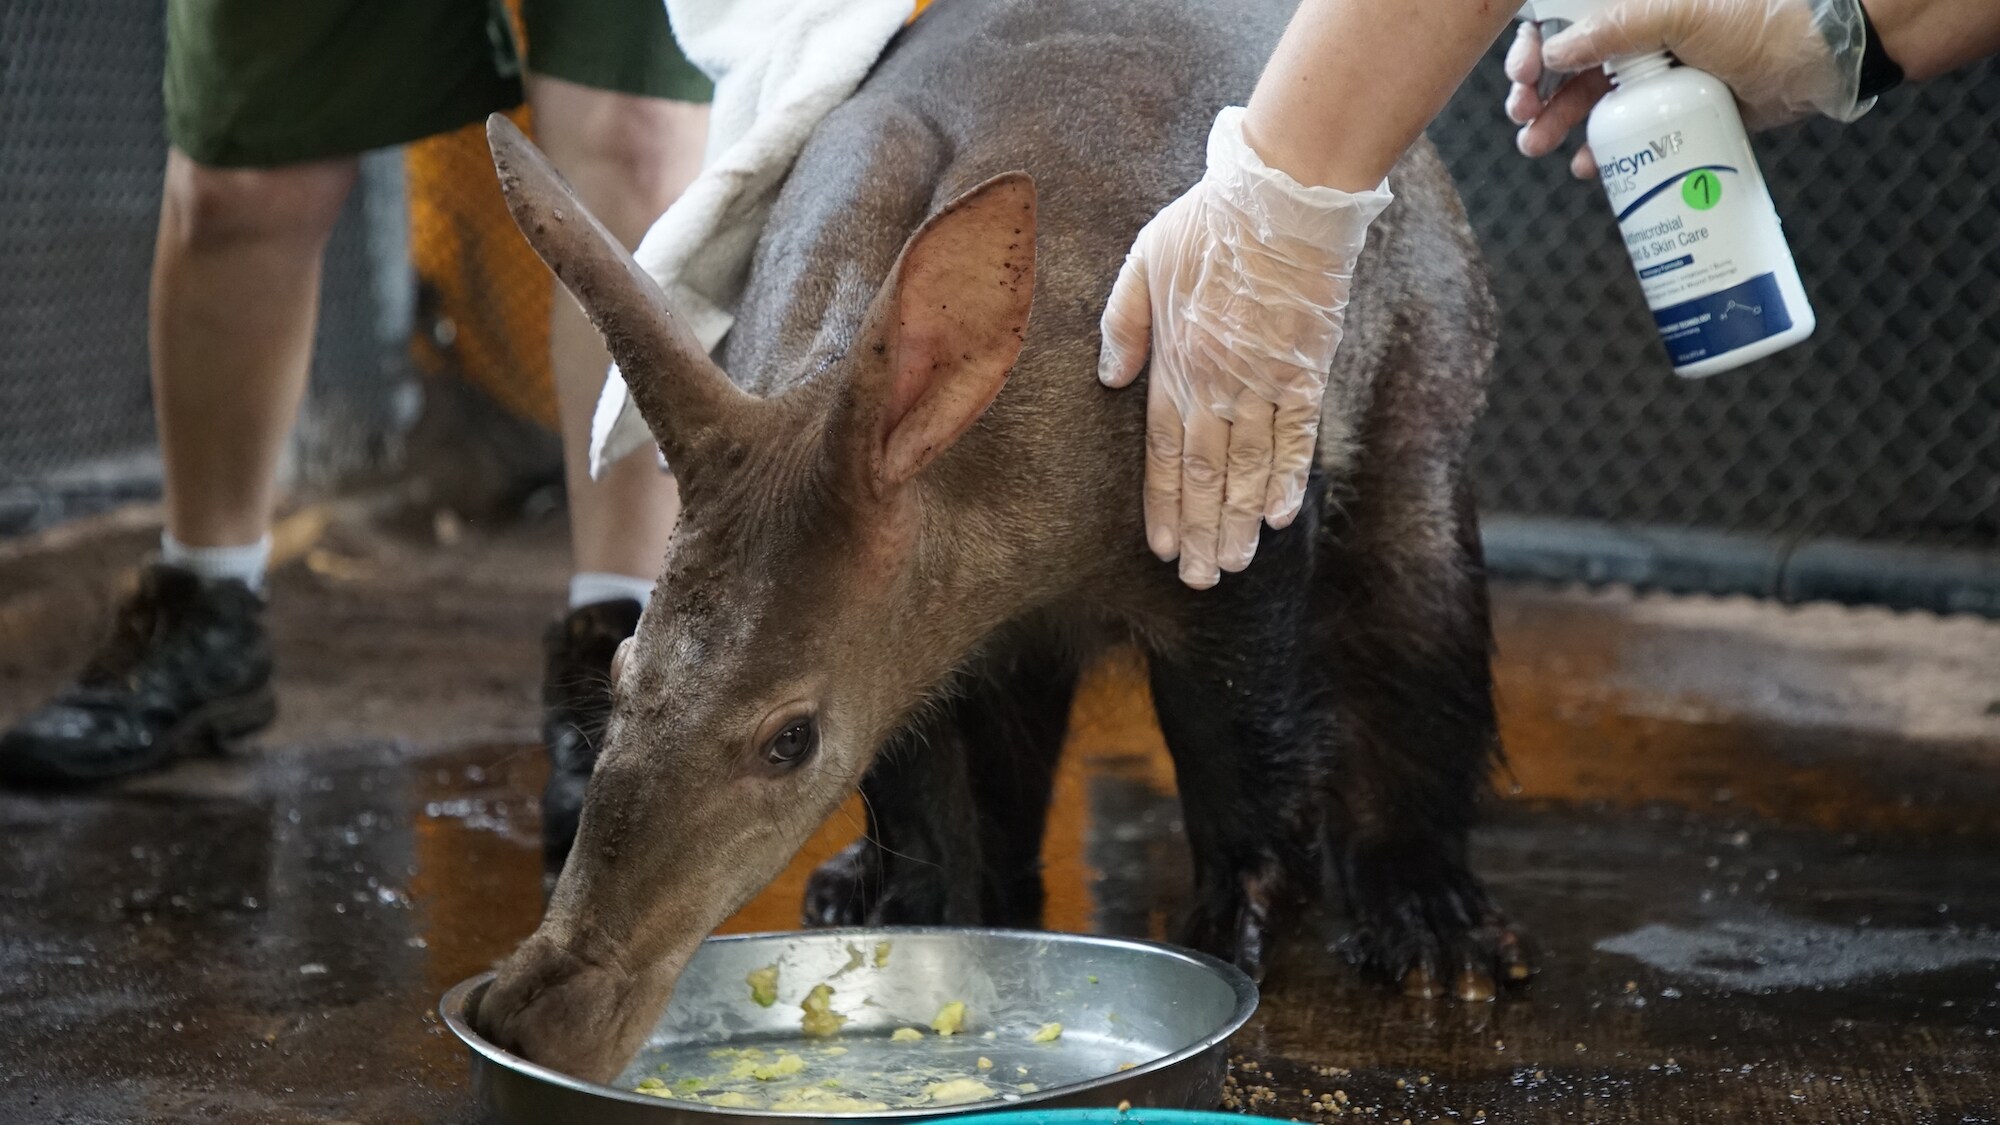 Willie the Aardvark is treated for a skin irritation. (Disney)